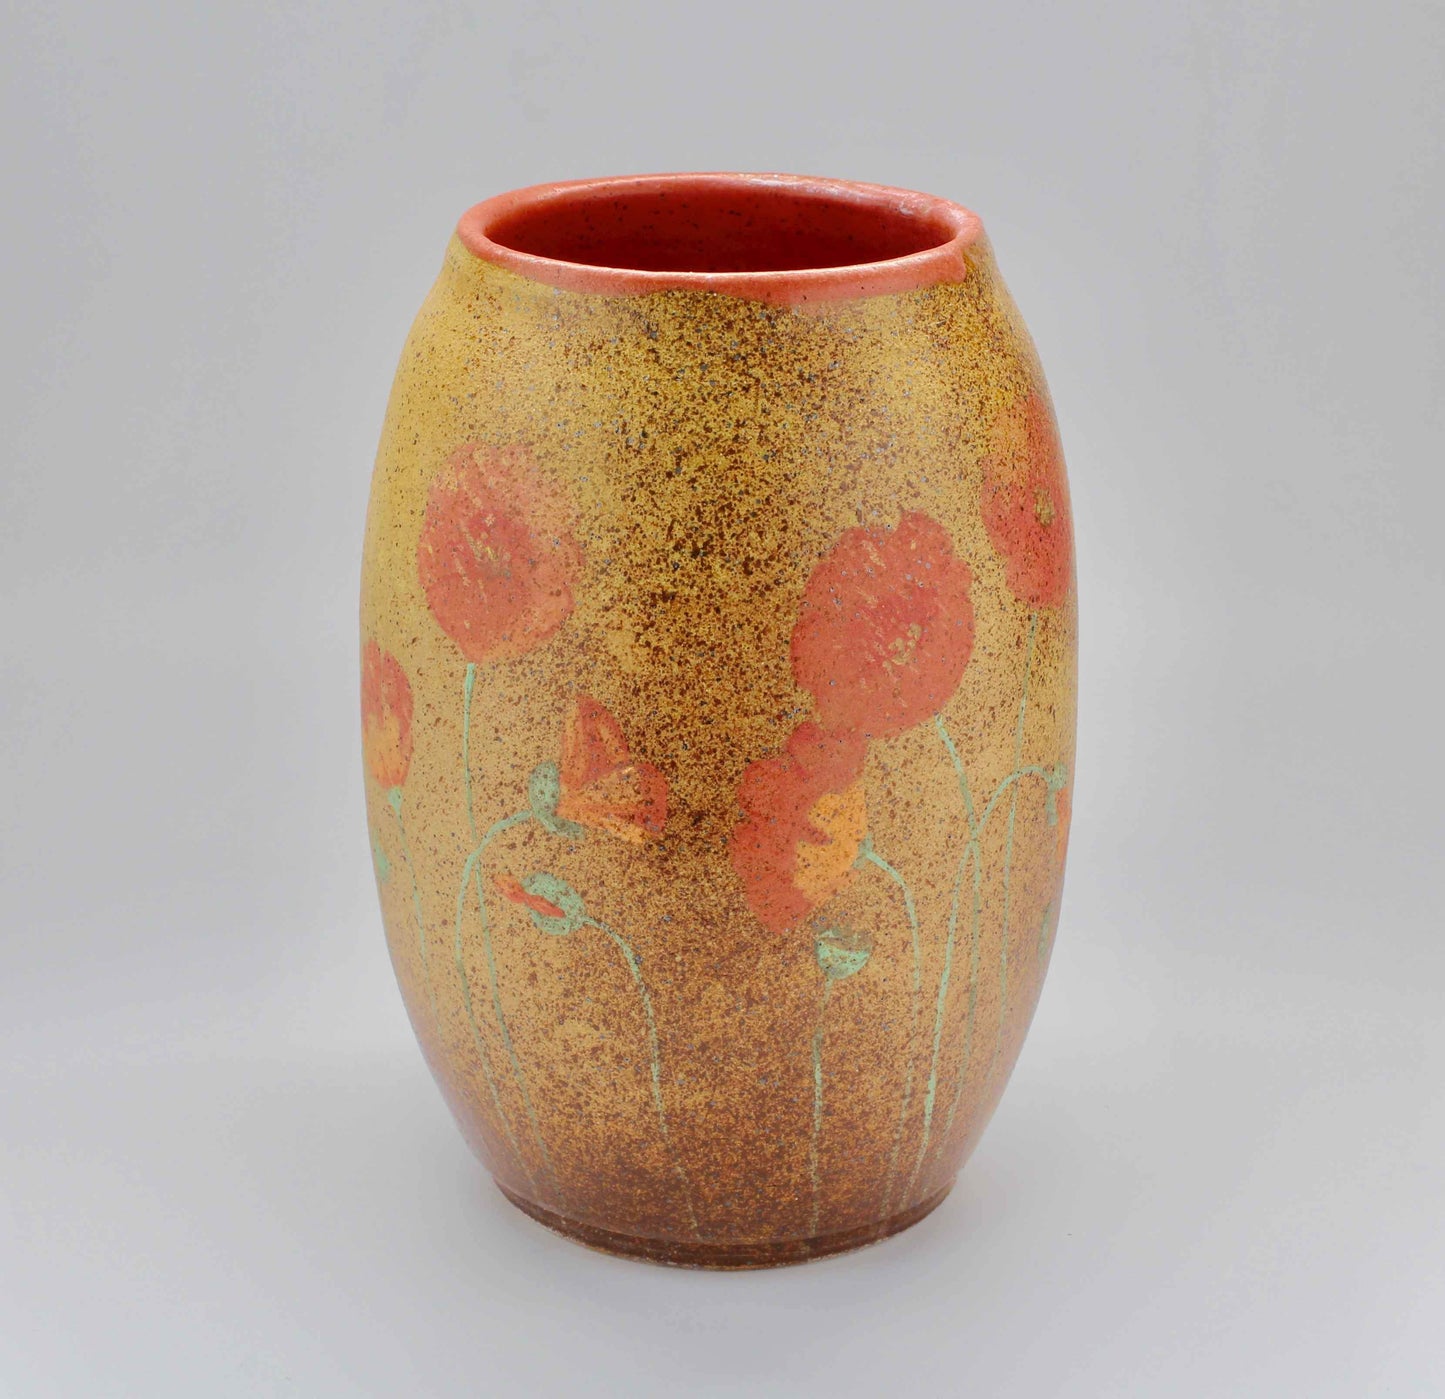 Laura Bruzzese-Sorrel Sky Gallery-Pottery-Poppies Vase